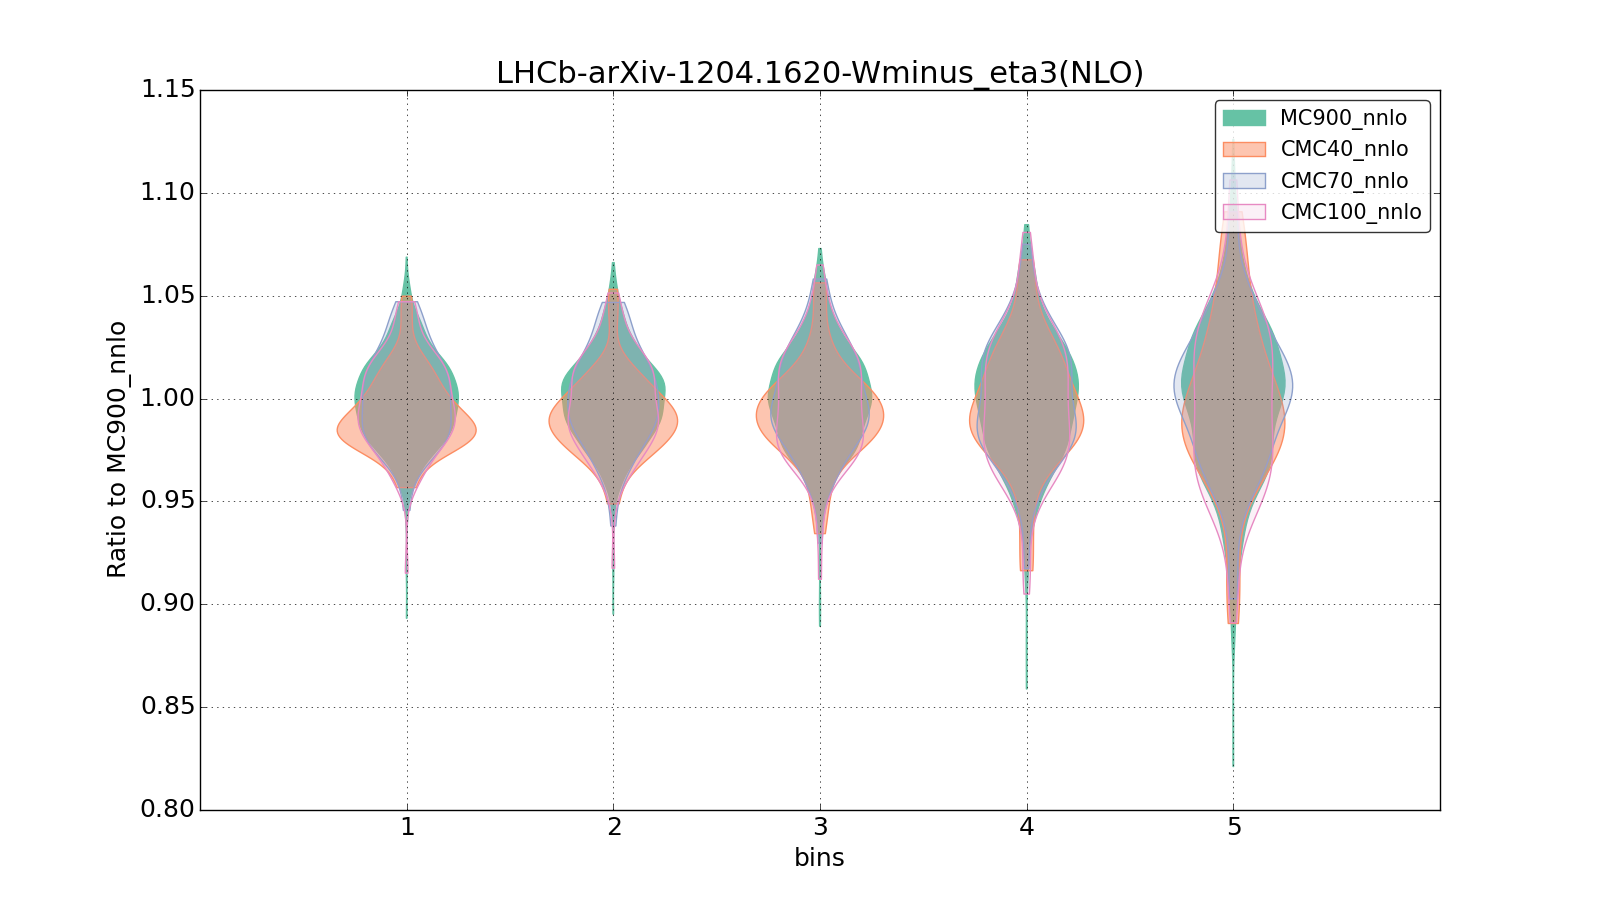 figure plots/CMCpheno/group_0_violinplot_LHCb-arXiv-12041620-Wminus_eta3(NLO).png